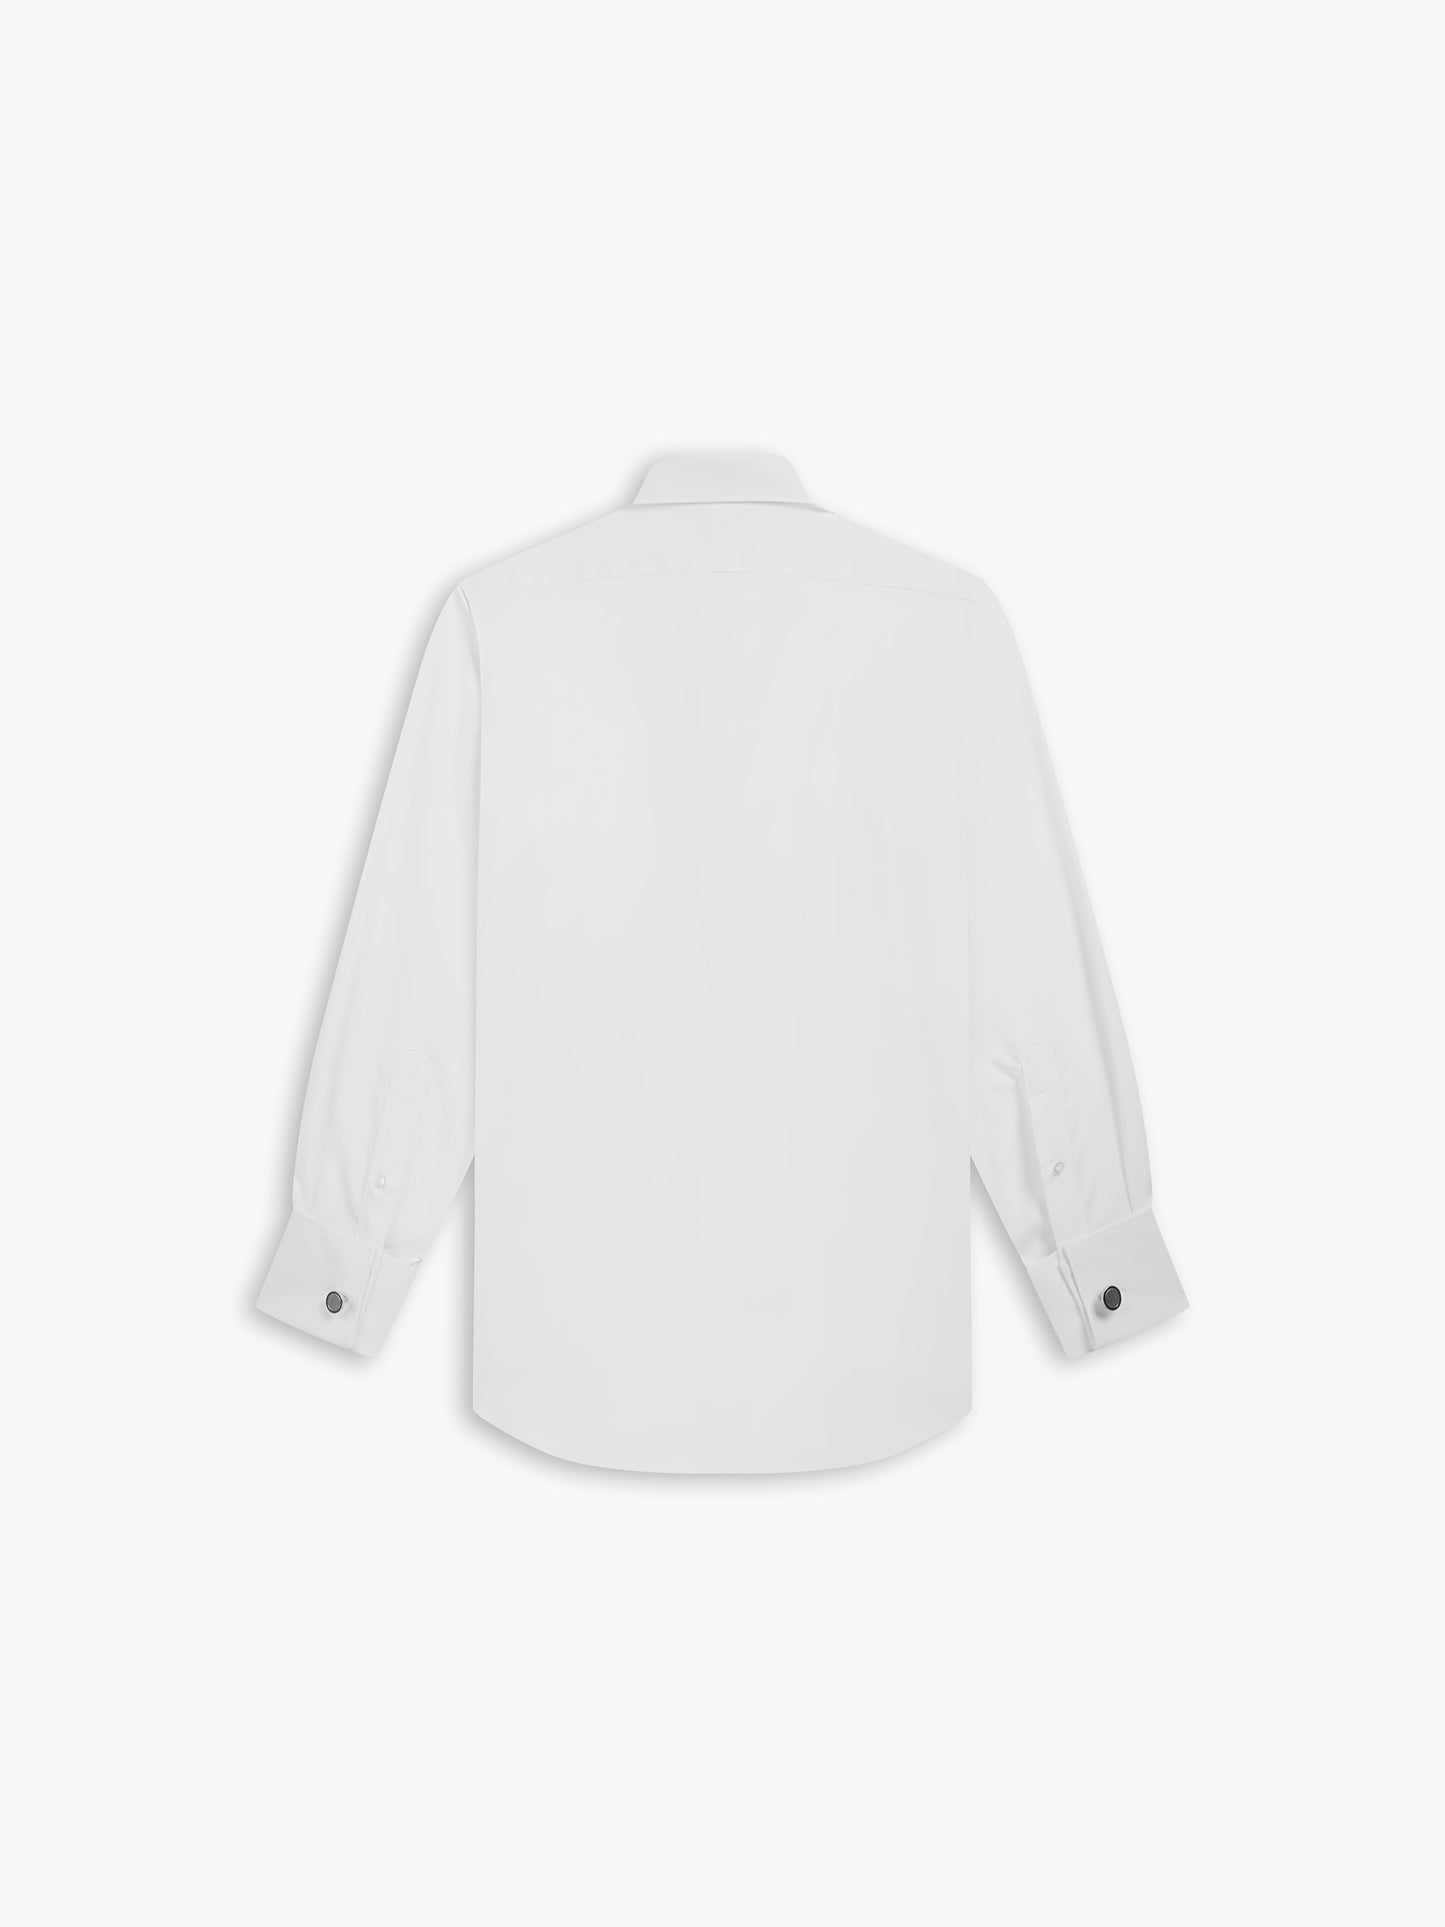 White Fine Twill Regular Fit Double Cuff Classic Collar Shirt